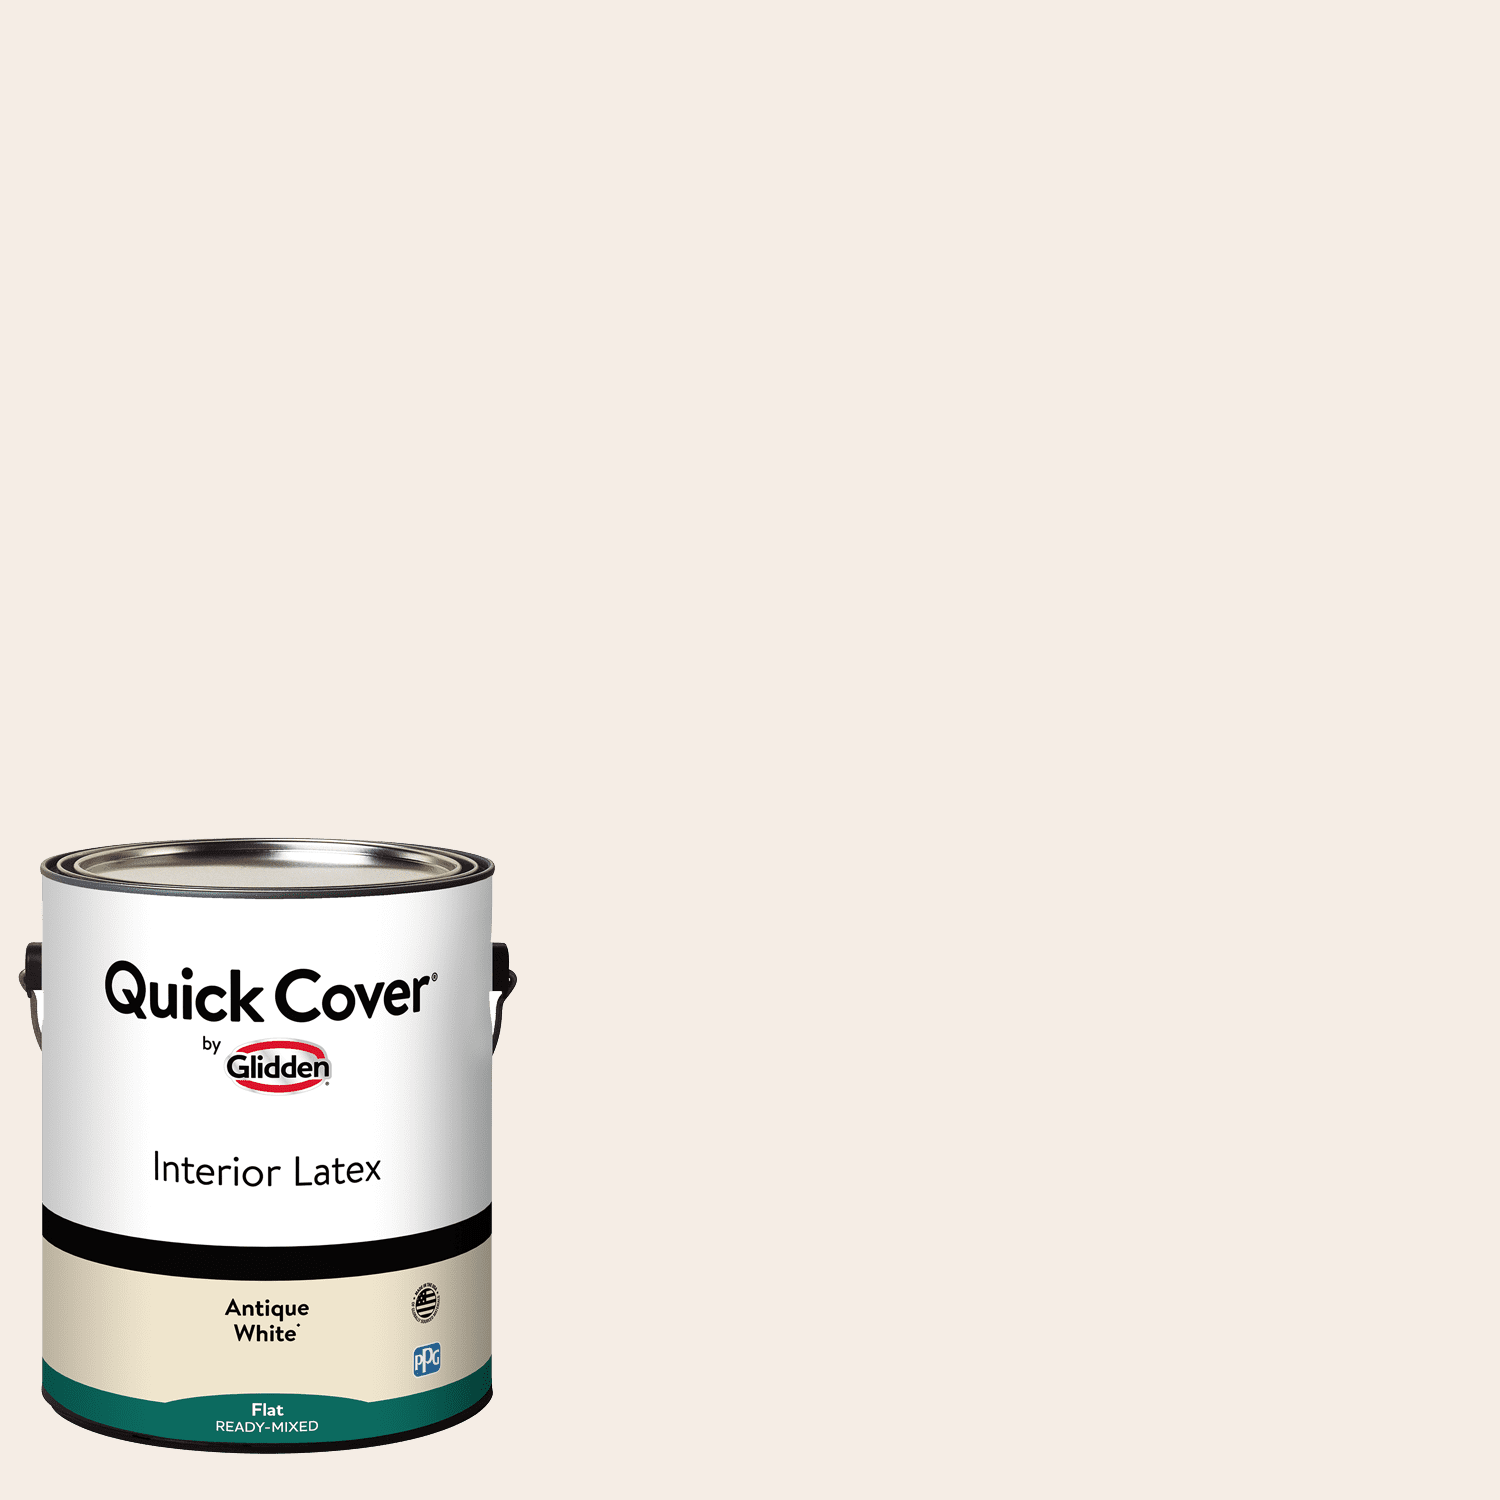 Glidden Quick Cover Interior Latex Paint Flat, Antique White, 1 Gallon